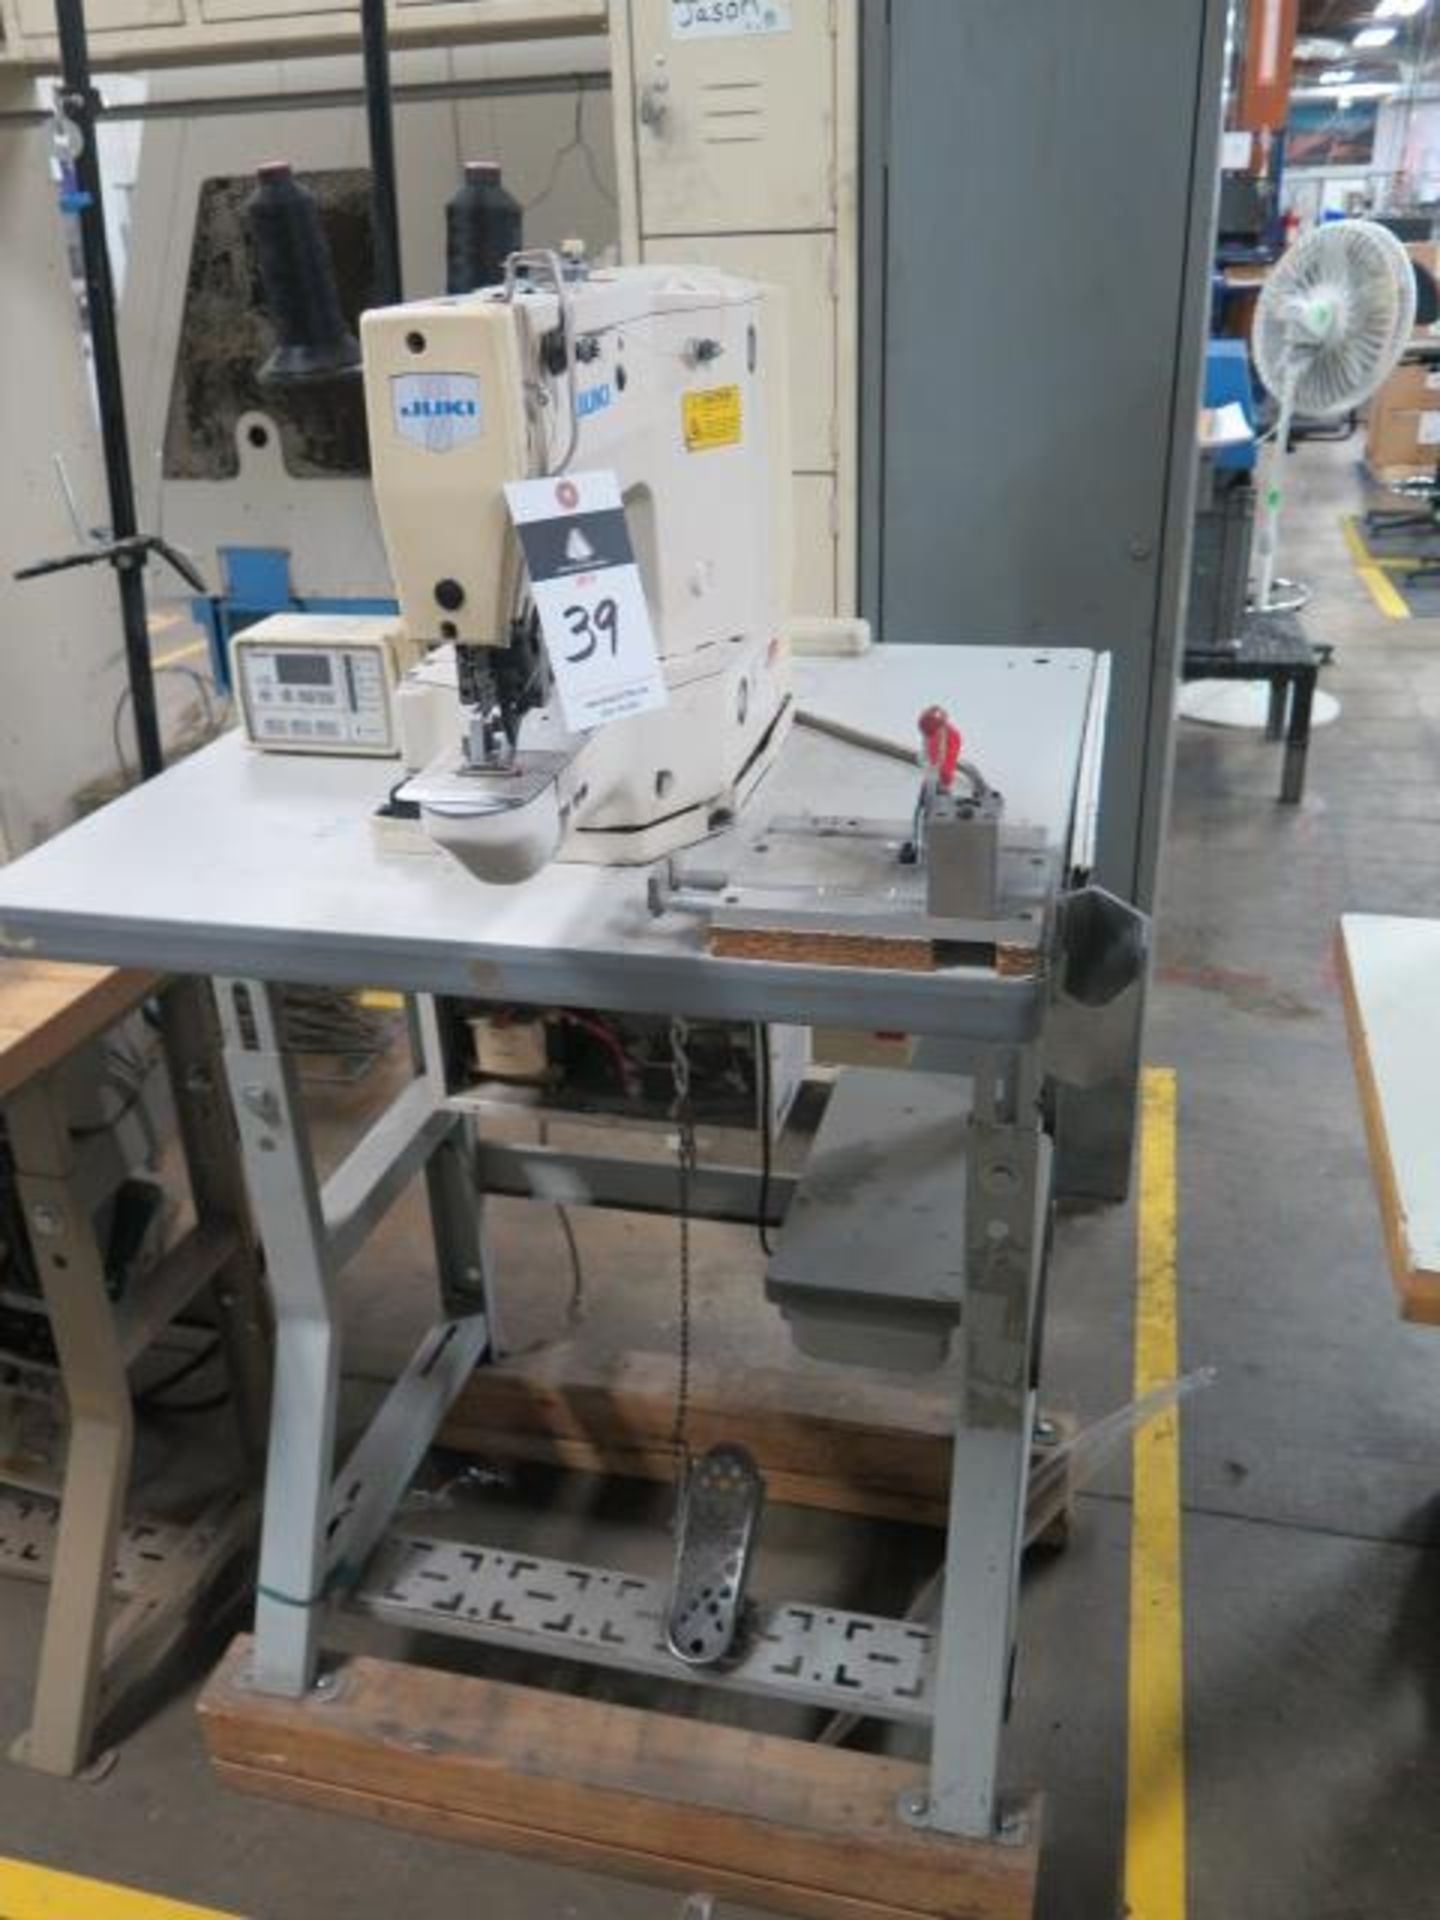 Juki Industrial Sewing Machine w/ Juki MC-590 Intelligent Sewing System Controls, SOLD AS IS